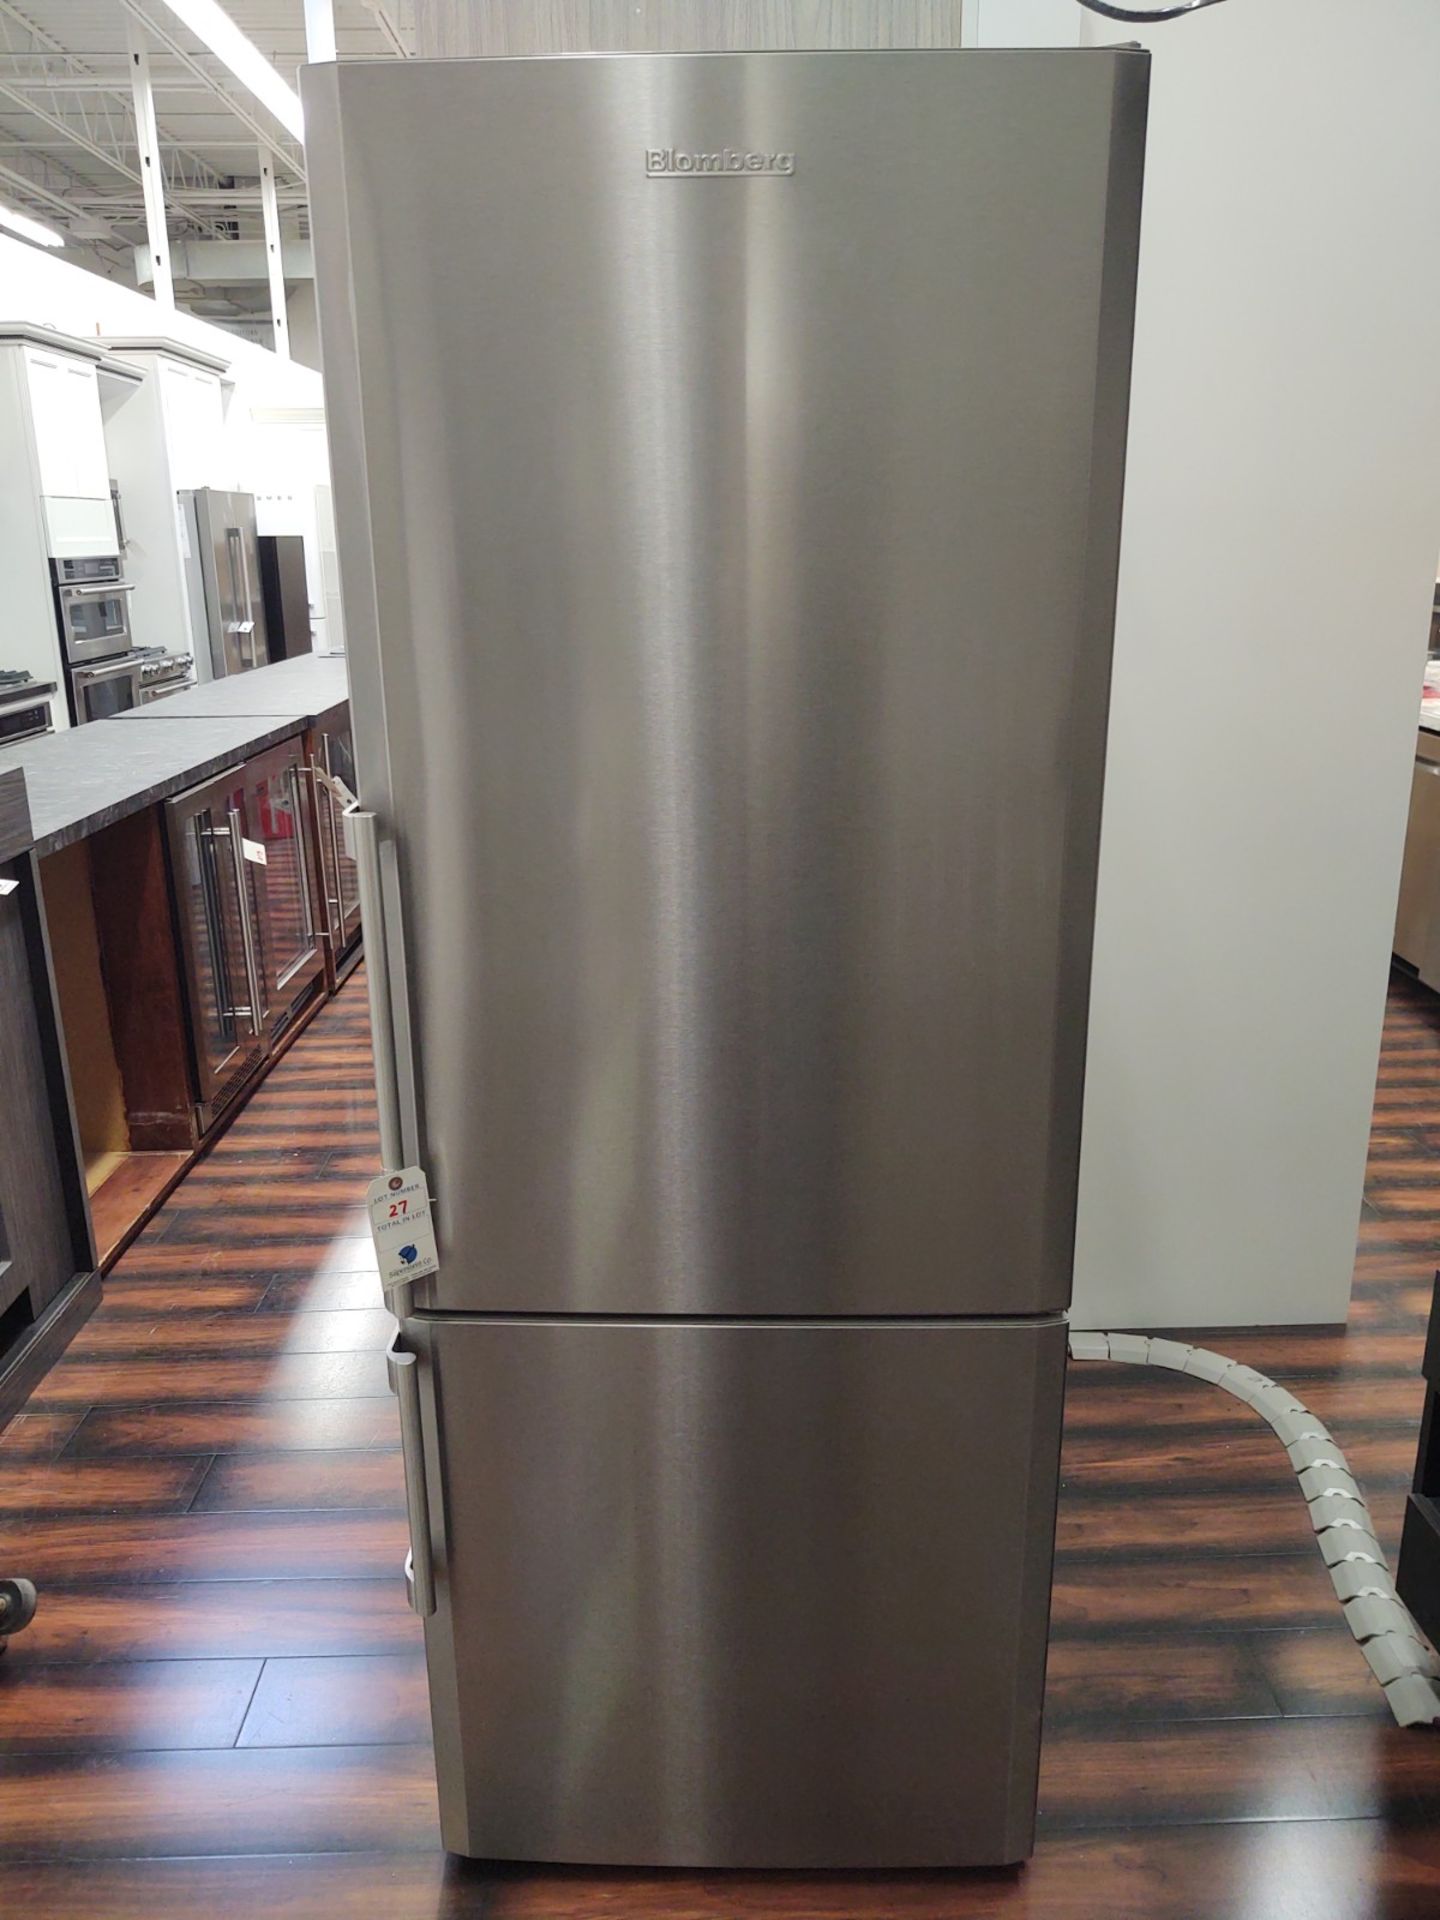 Blomberg Refrigerator Freezer #BRFB 15 Series, Model 7, 27"W Stainless Steel Finish, Bottom Freezer